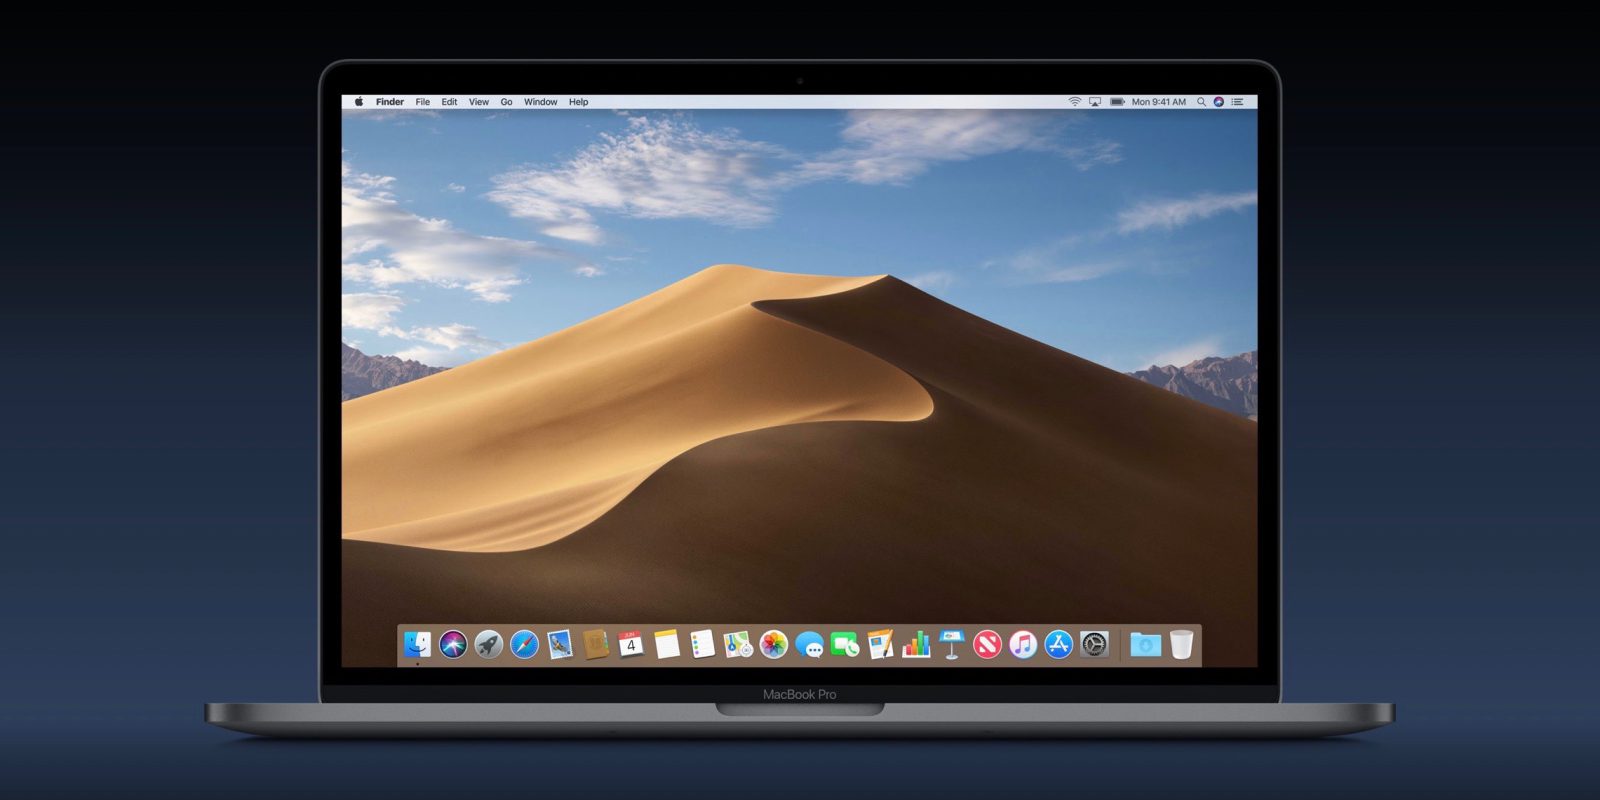 Mojave for mac instal free